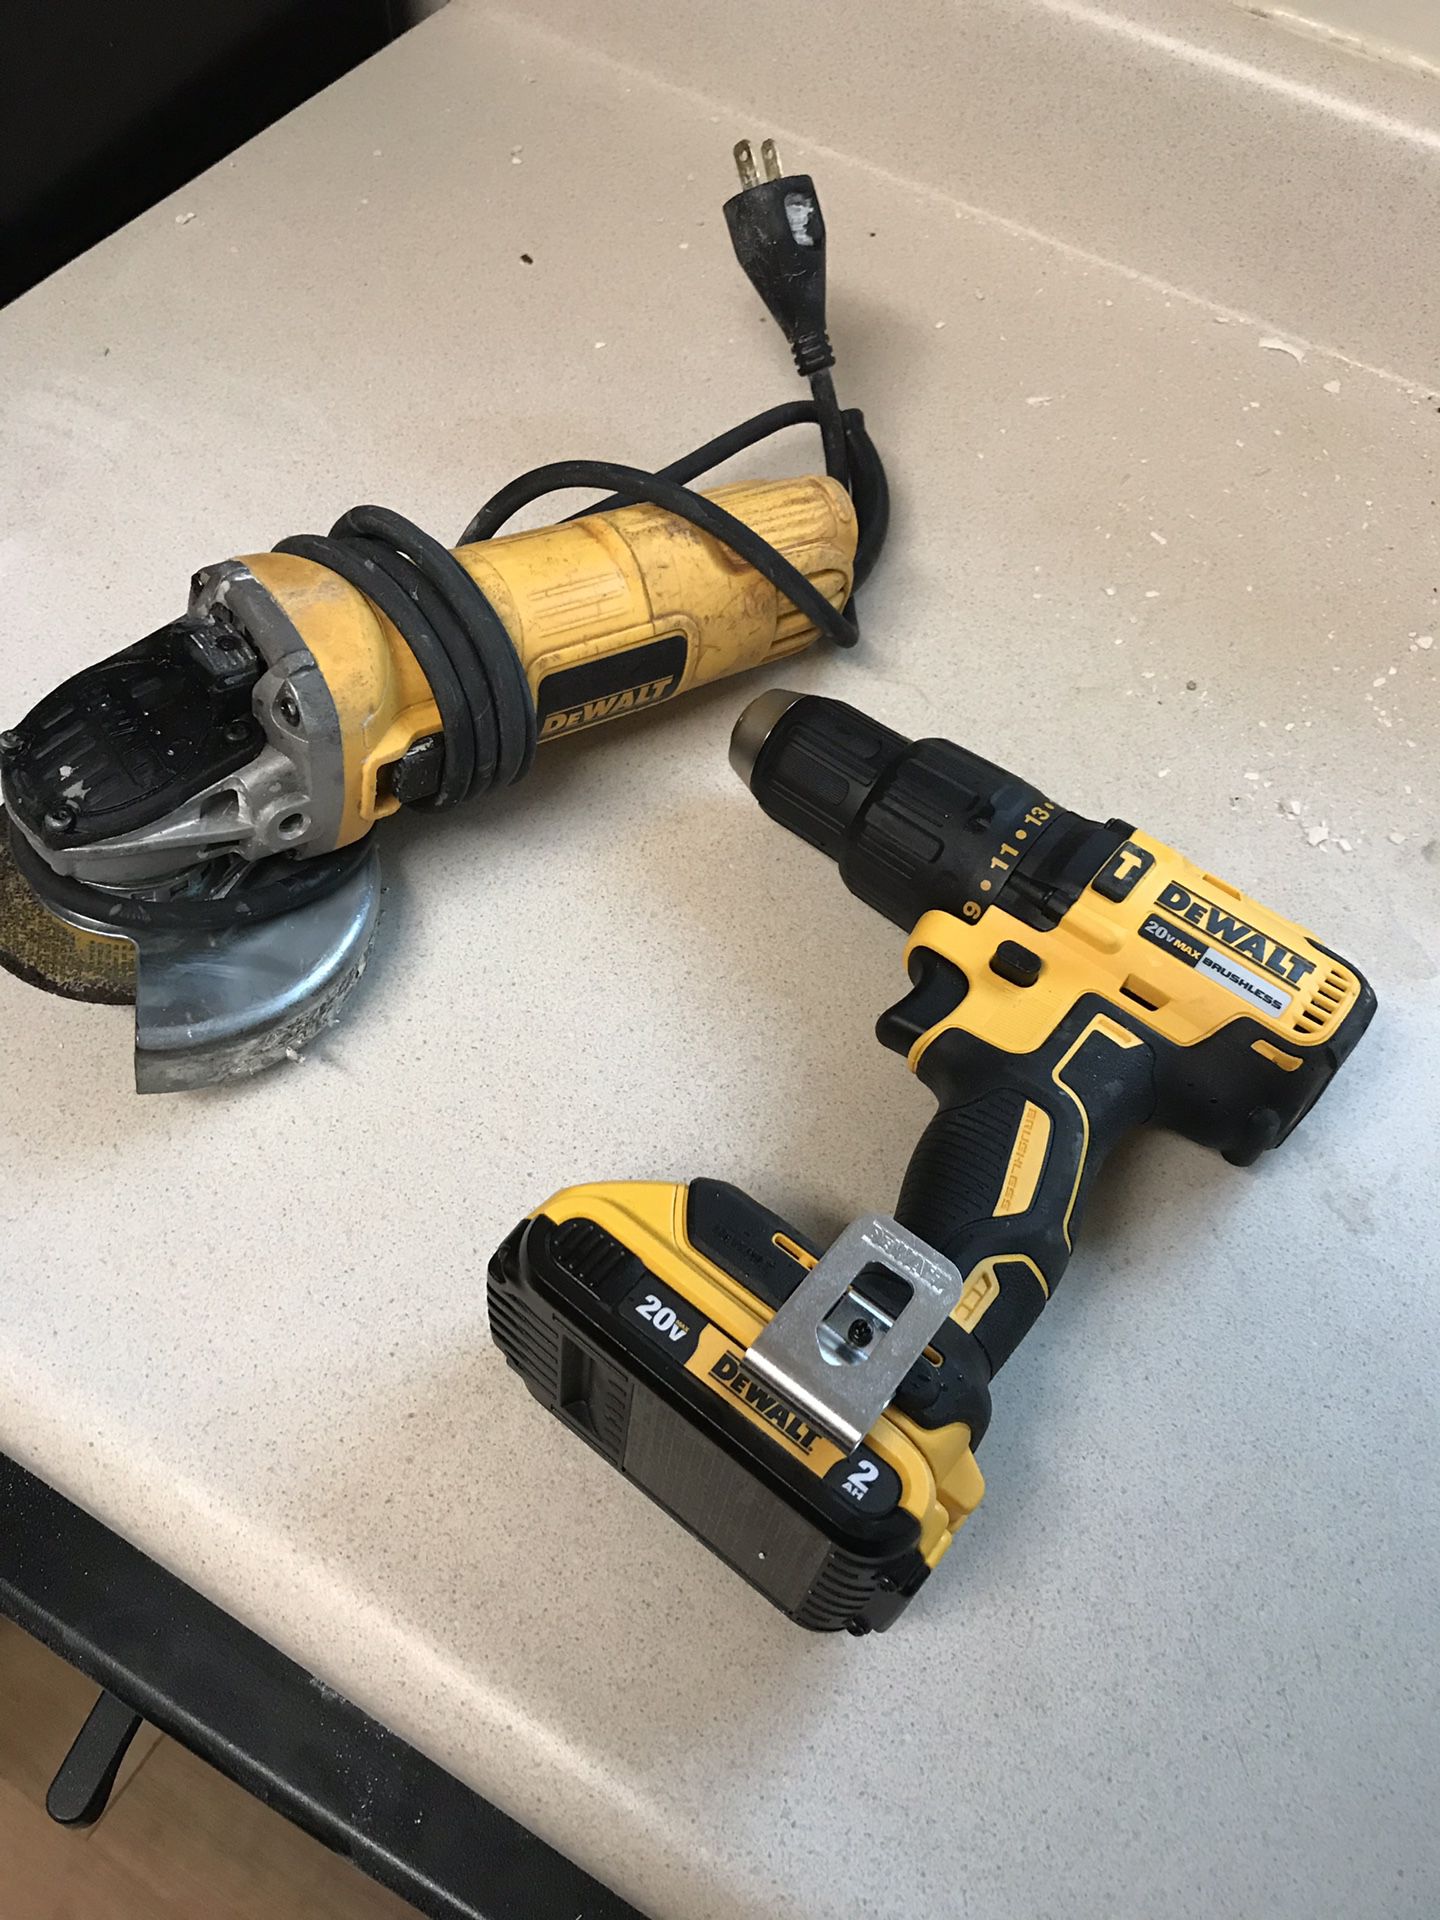 Dewalt grinder and drill battery no charger